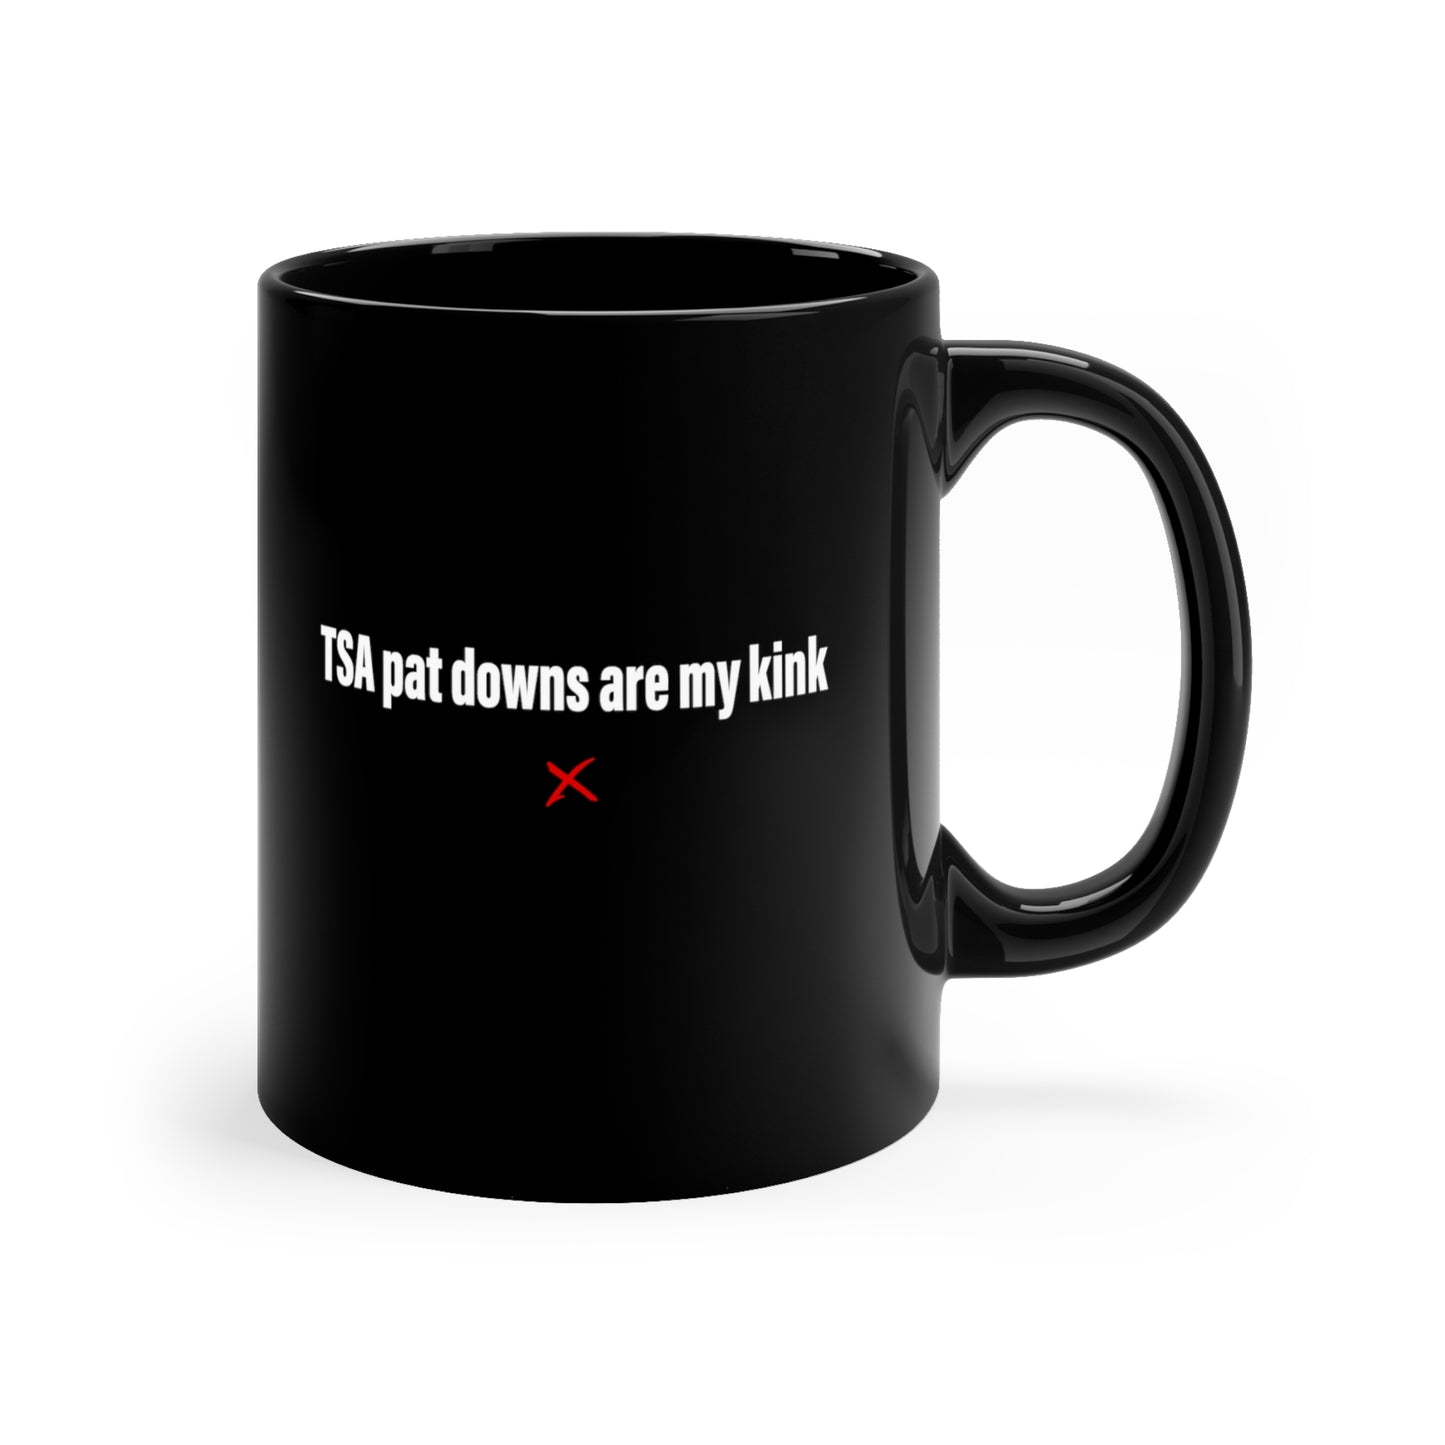 TSA pat downs are my kink - Mug